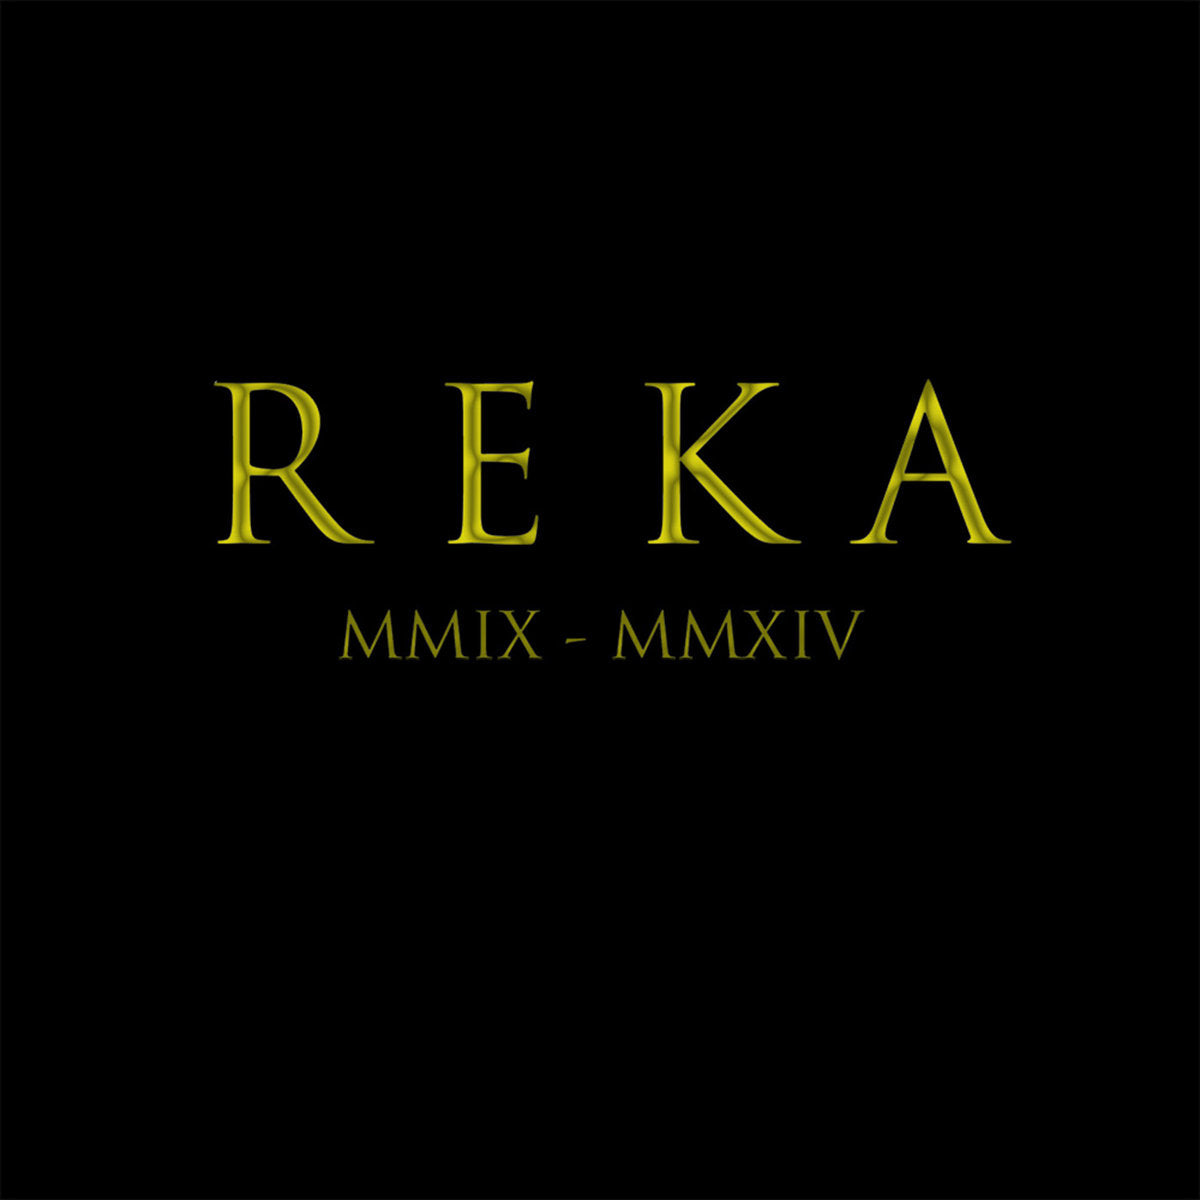 REKA "MMIX - MMXIV Boxset" 4xCD